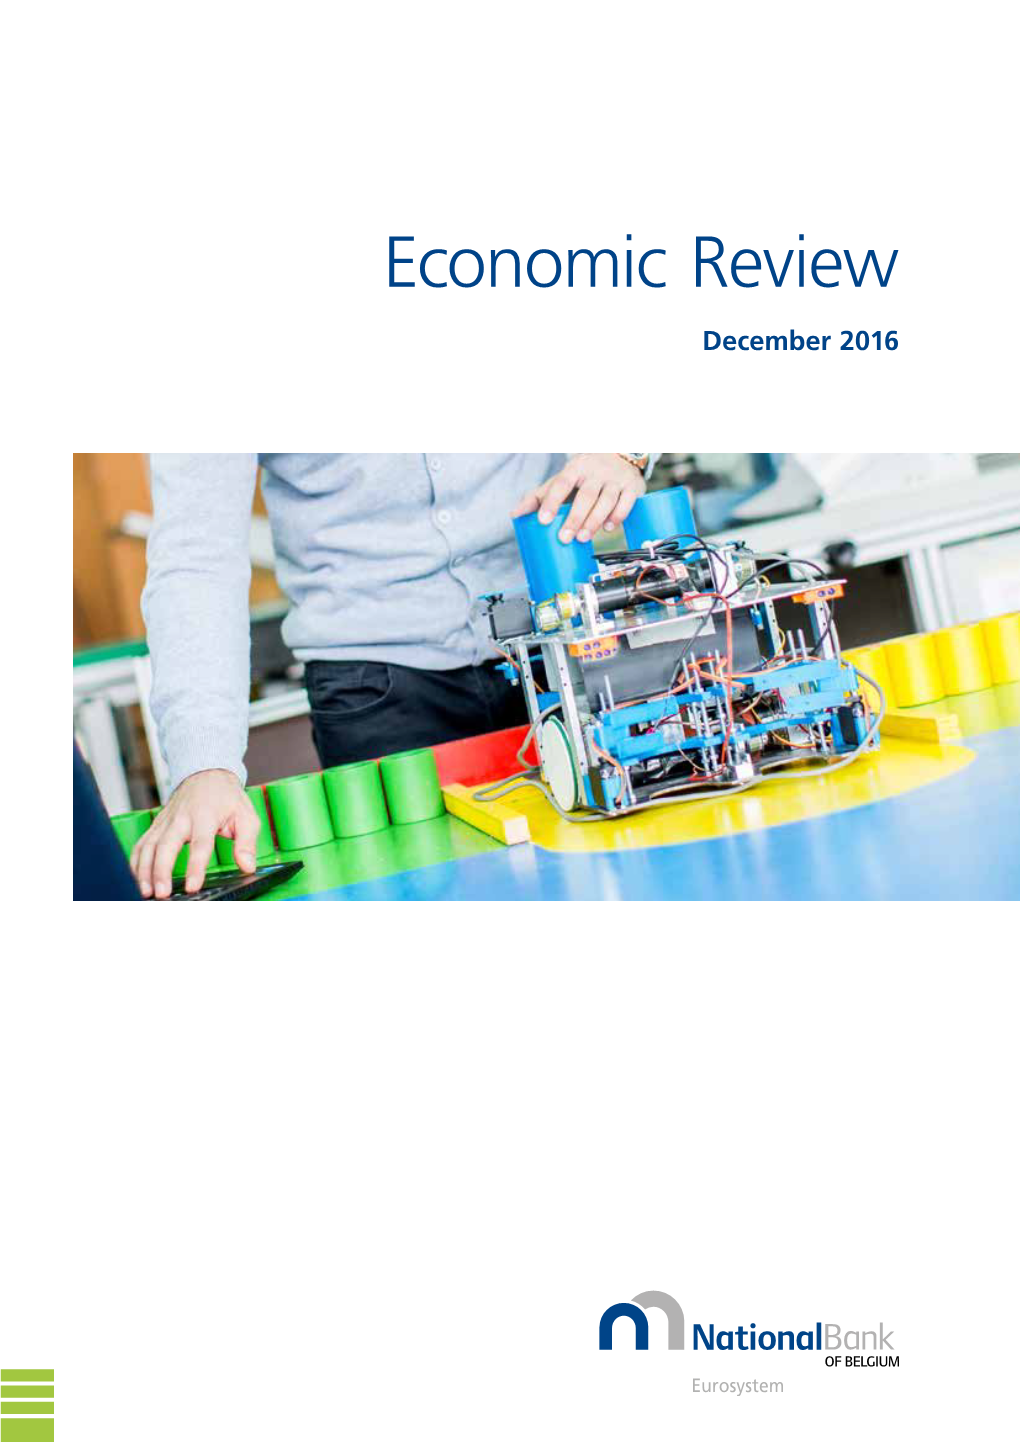 Economic Review December 2016 © National Bank of Belgium